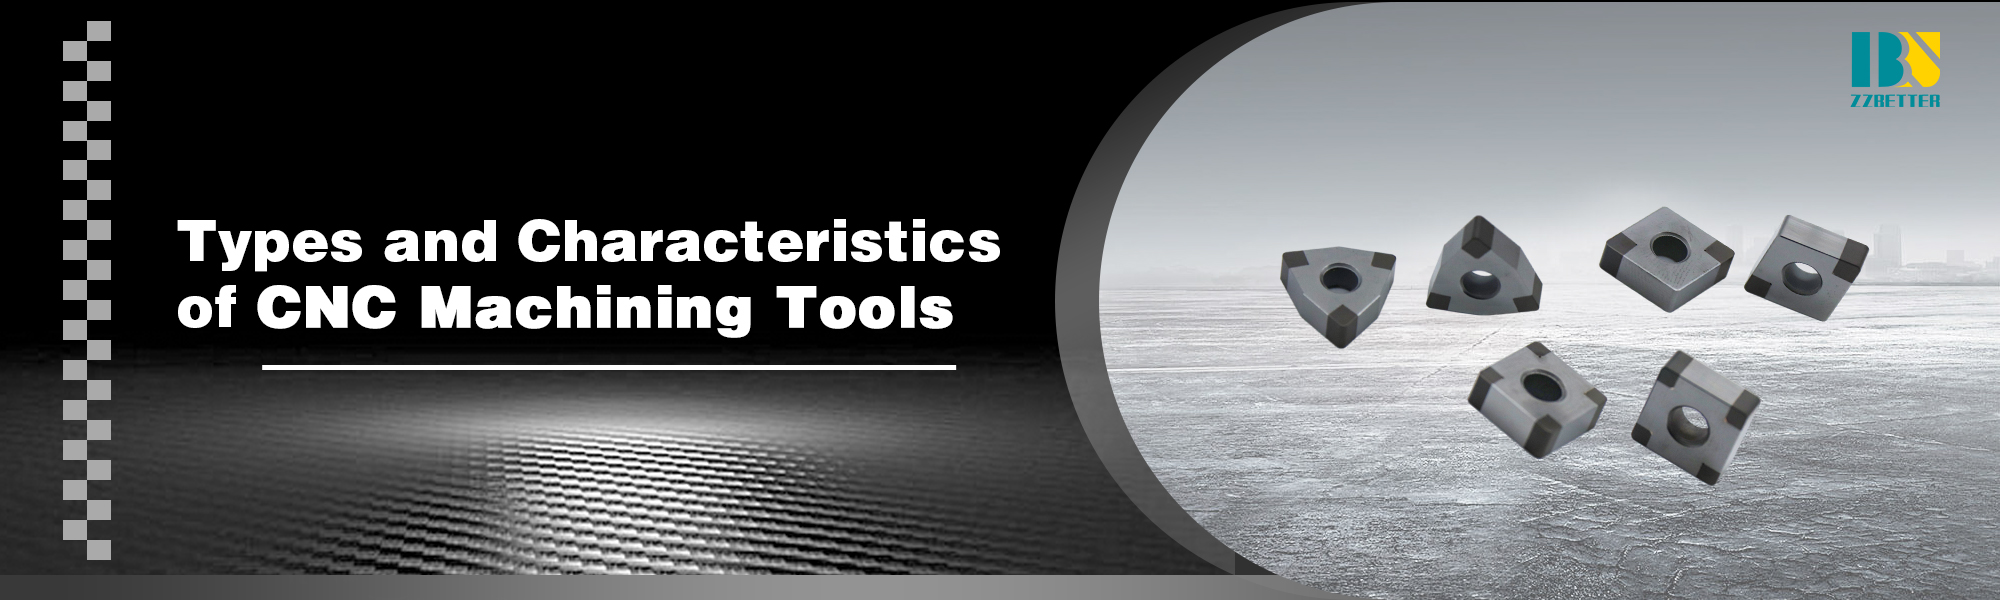 Types and Characteristics of CNC Tools